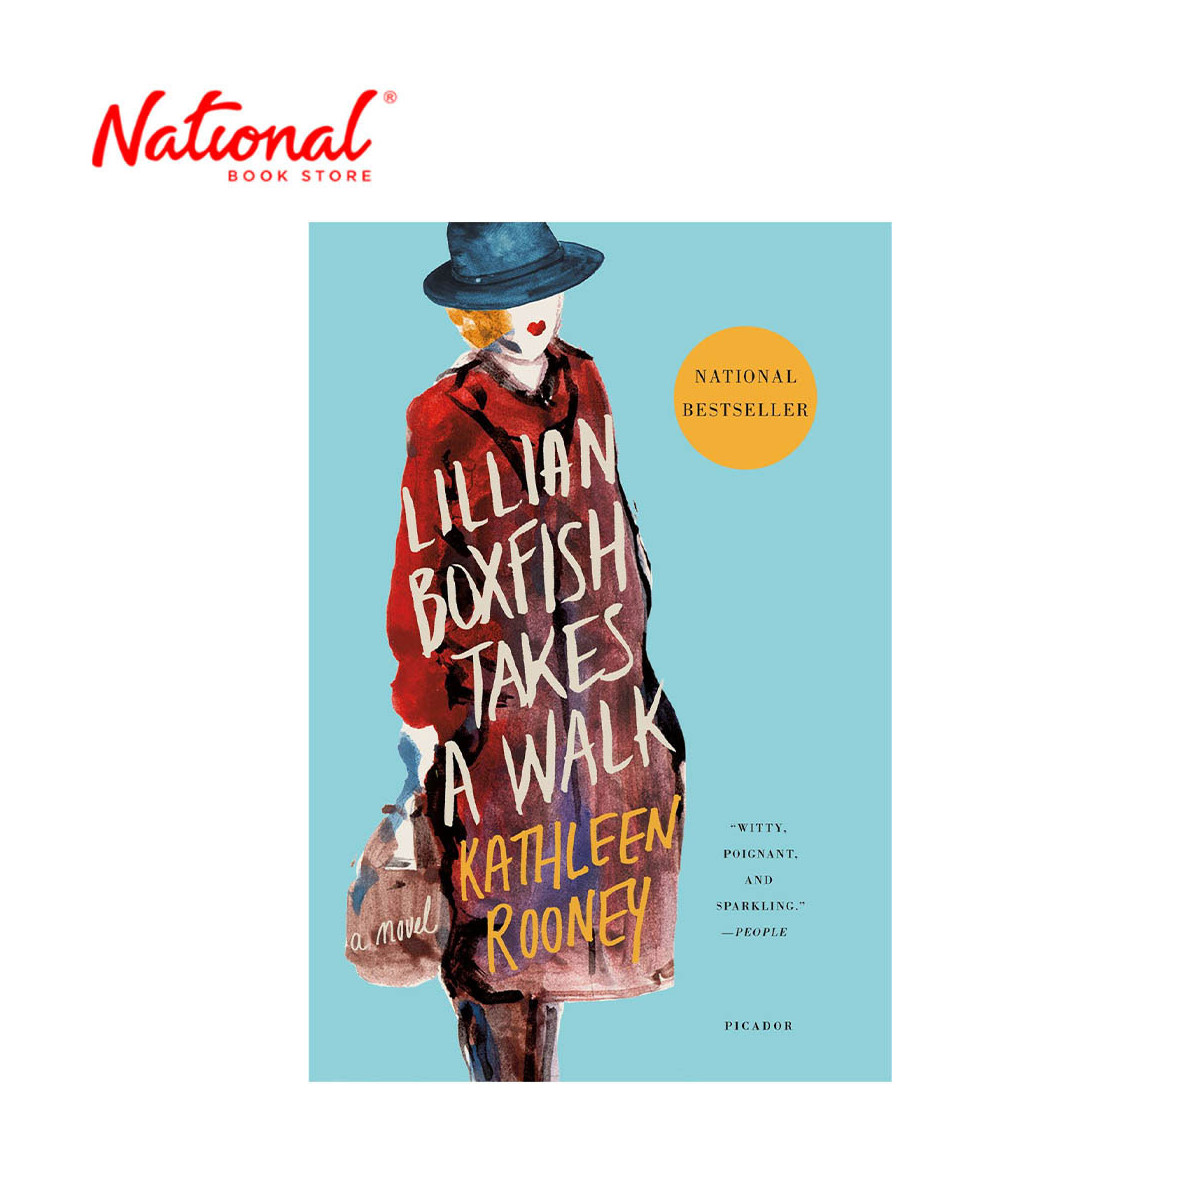 Lillian Boxfish Takes A Walk: A Novel by Kathleen Rooney - Trade Paperback - Contemporary Fiction